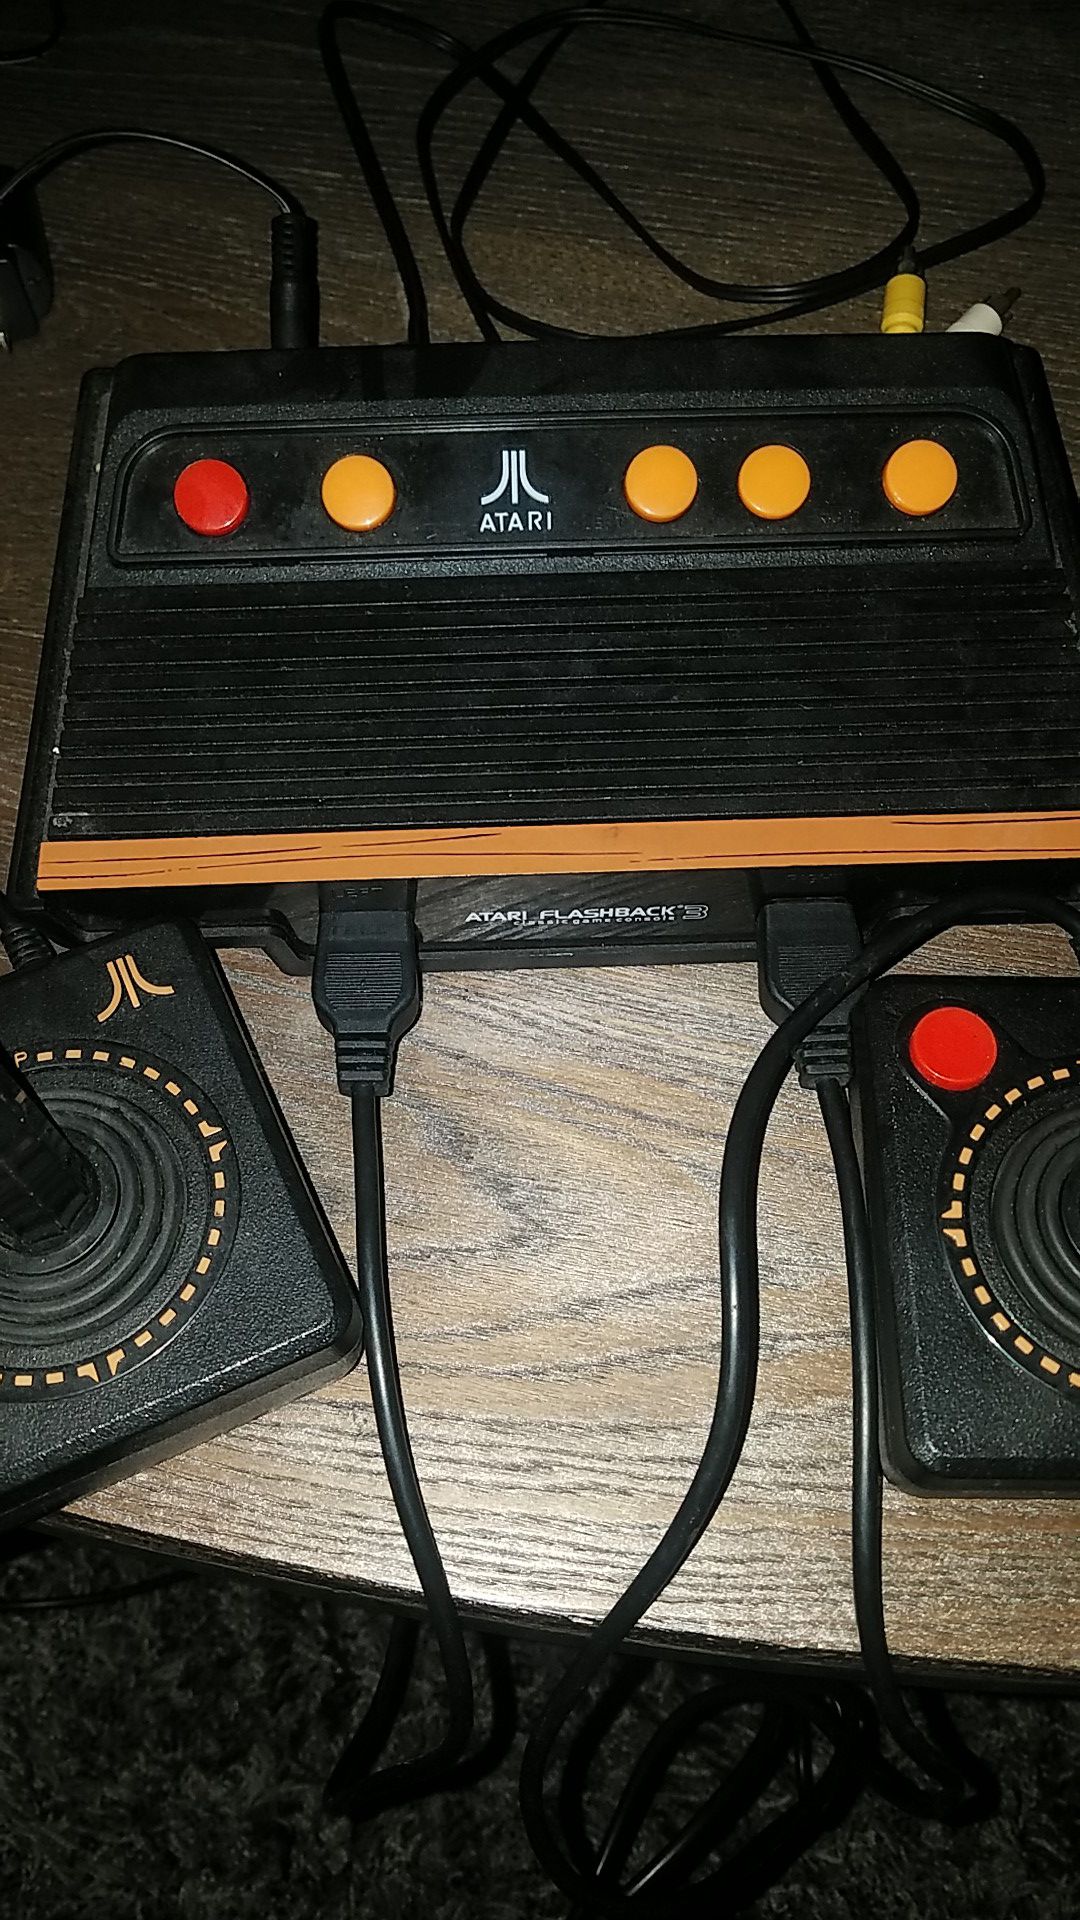 Atari flashback 3 classic game console's